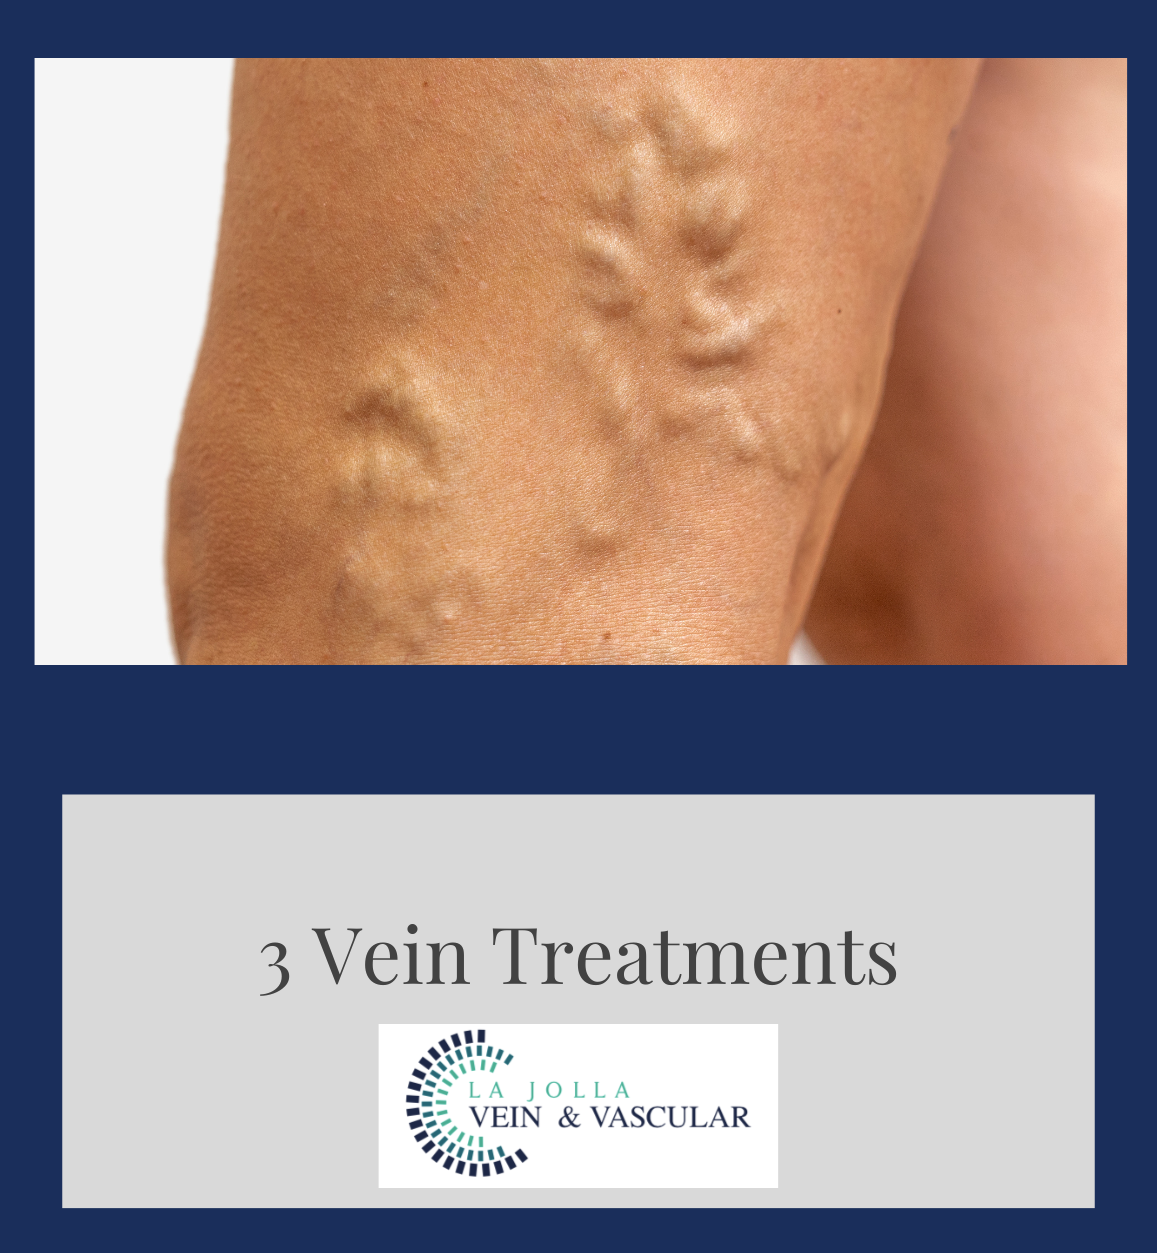 vein treatments